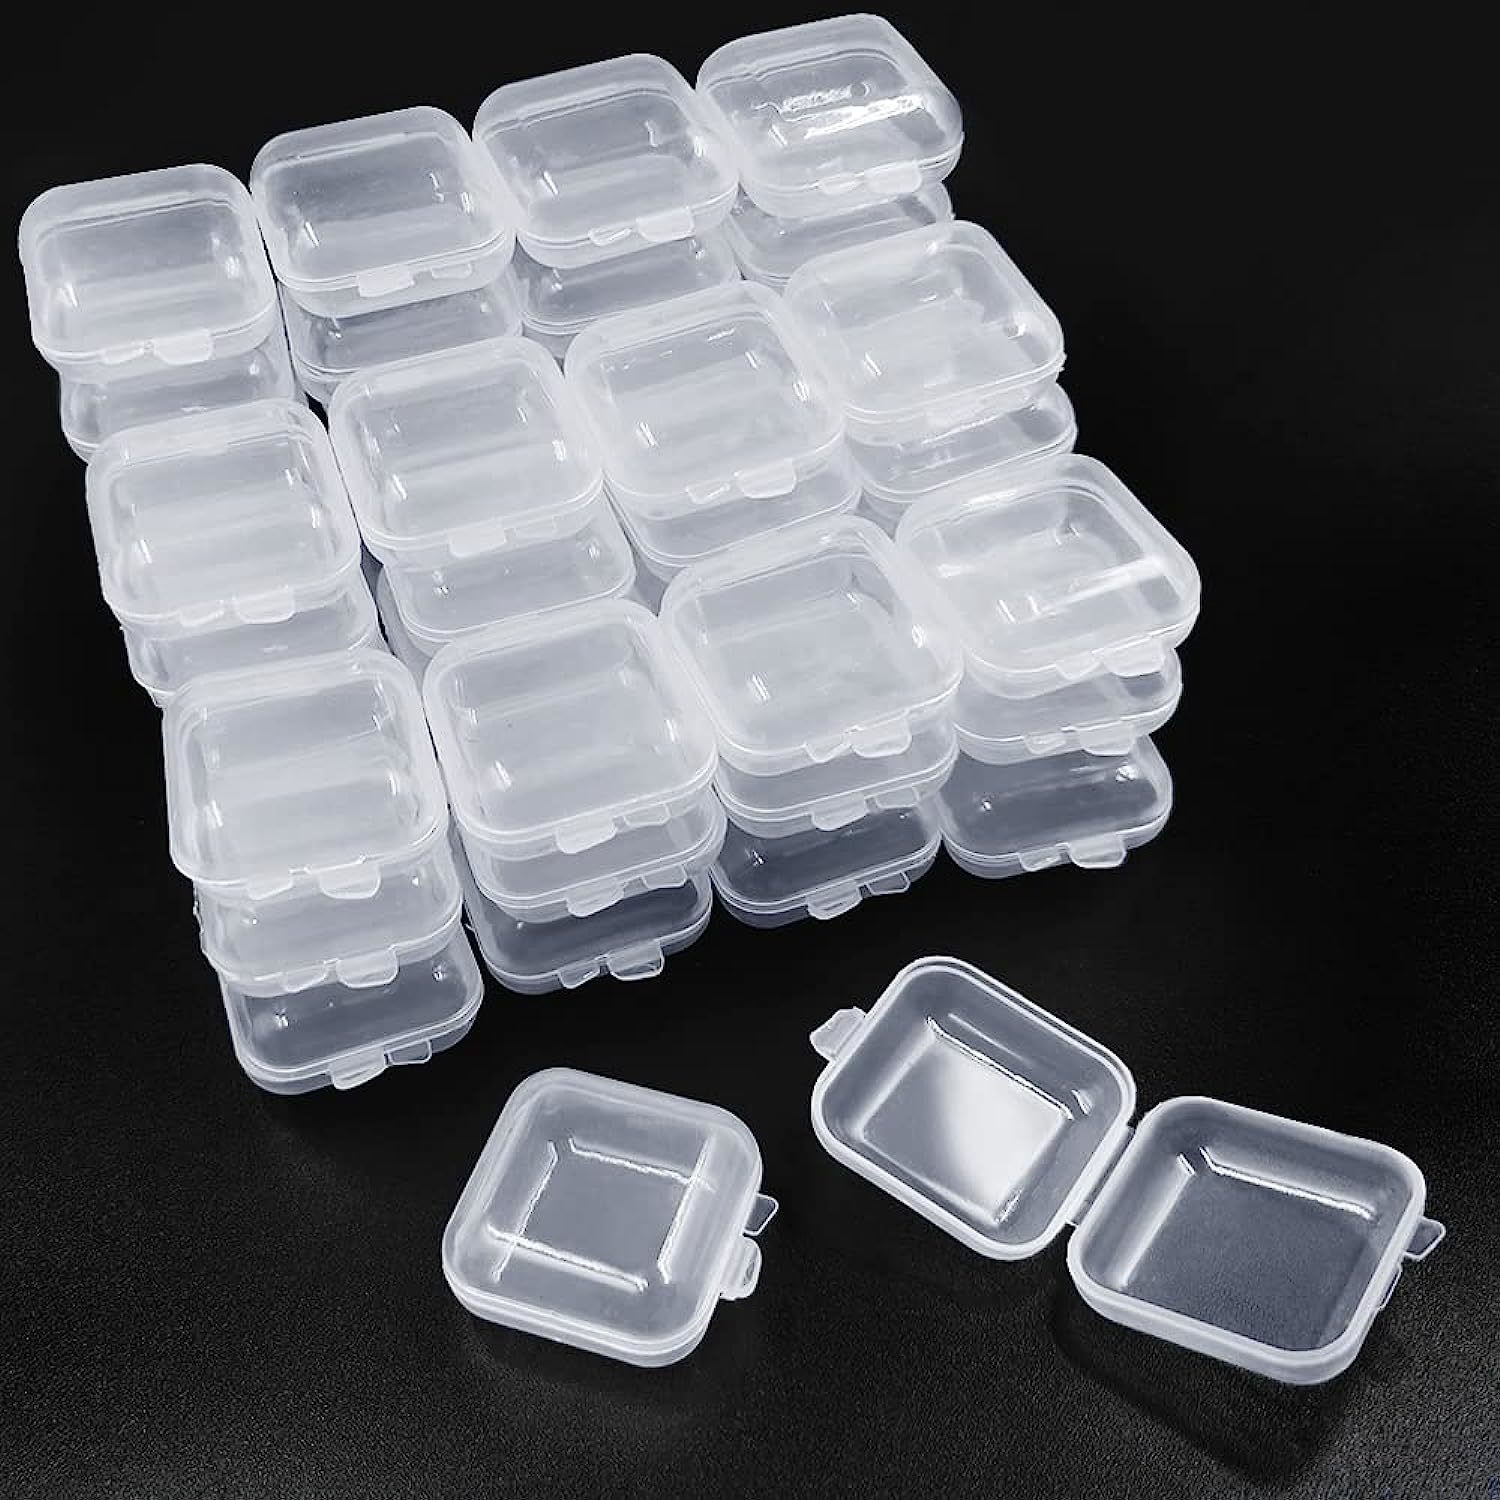 SimpleHouseware Freezer Organizer Storage Bins, Clear, Set of 8